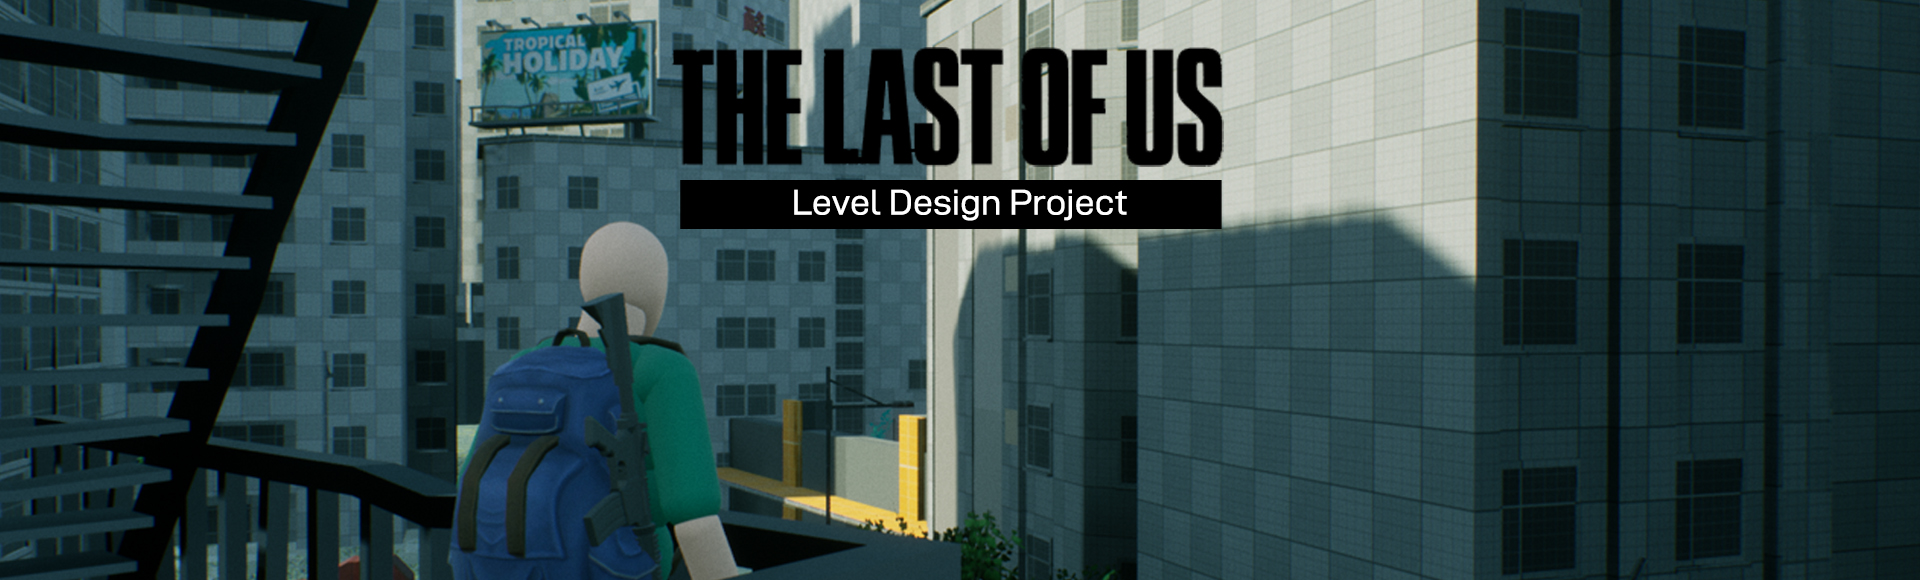 Fan Project - The Last Of Us - Downtown - 2020